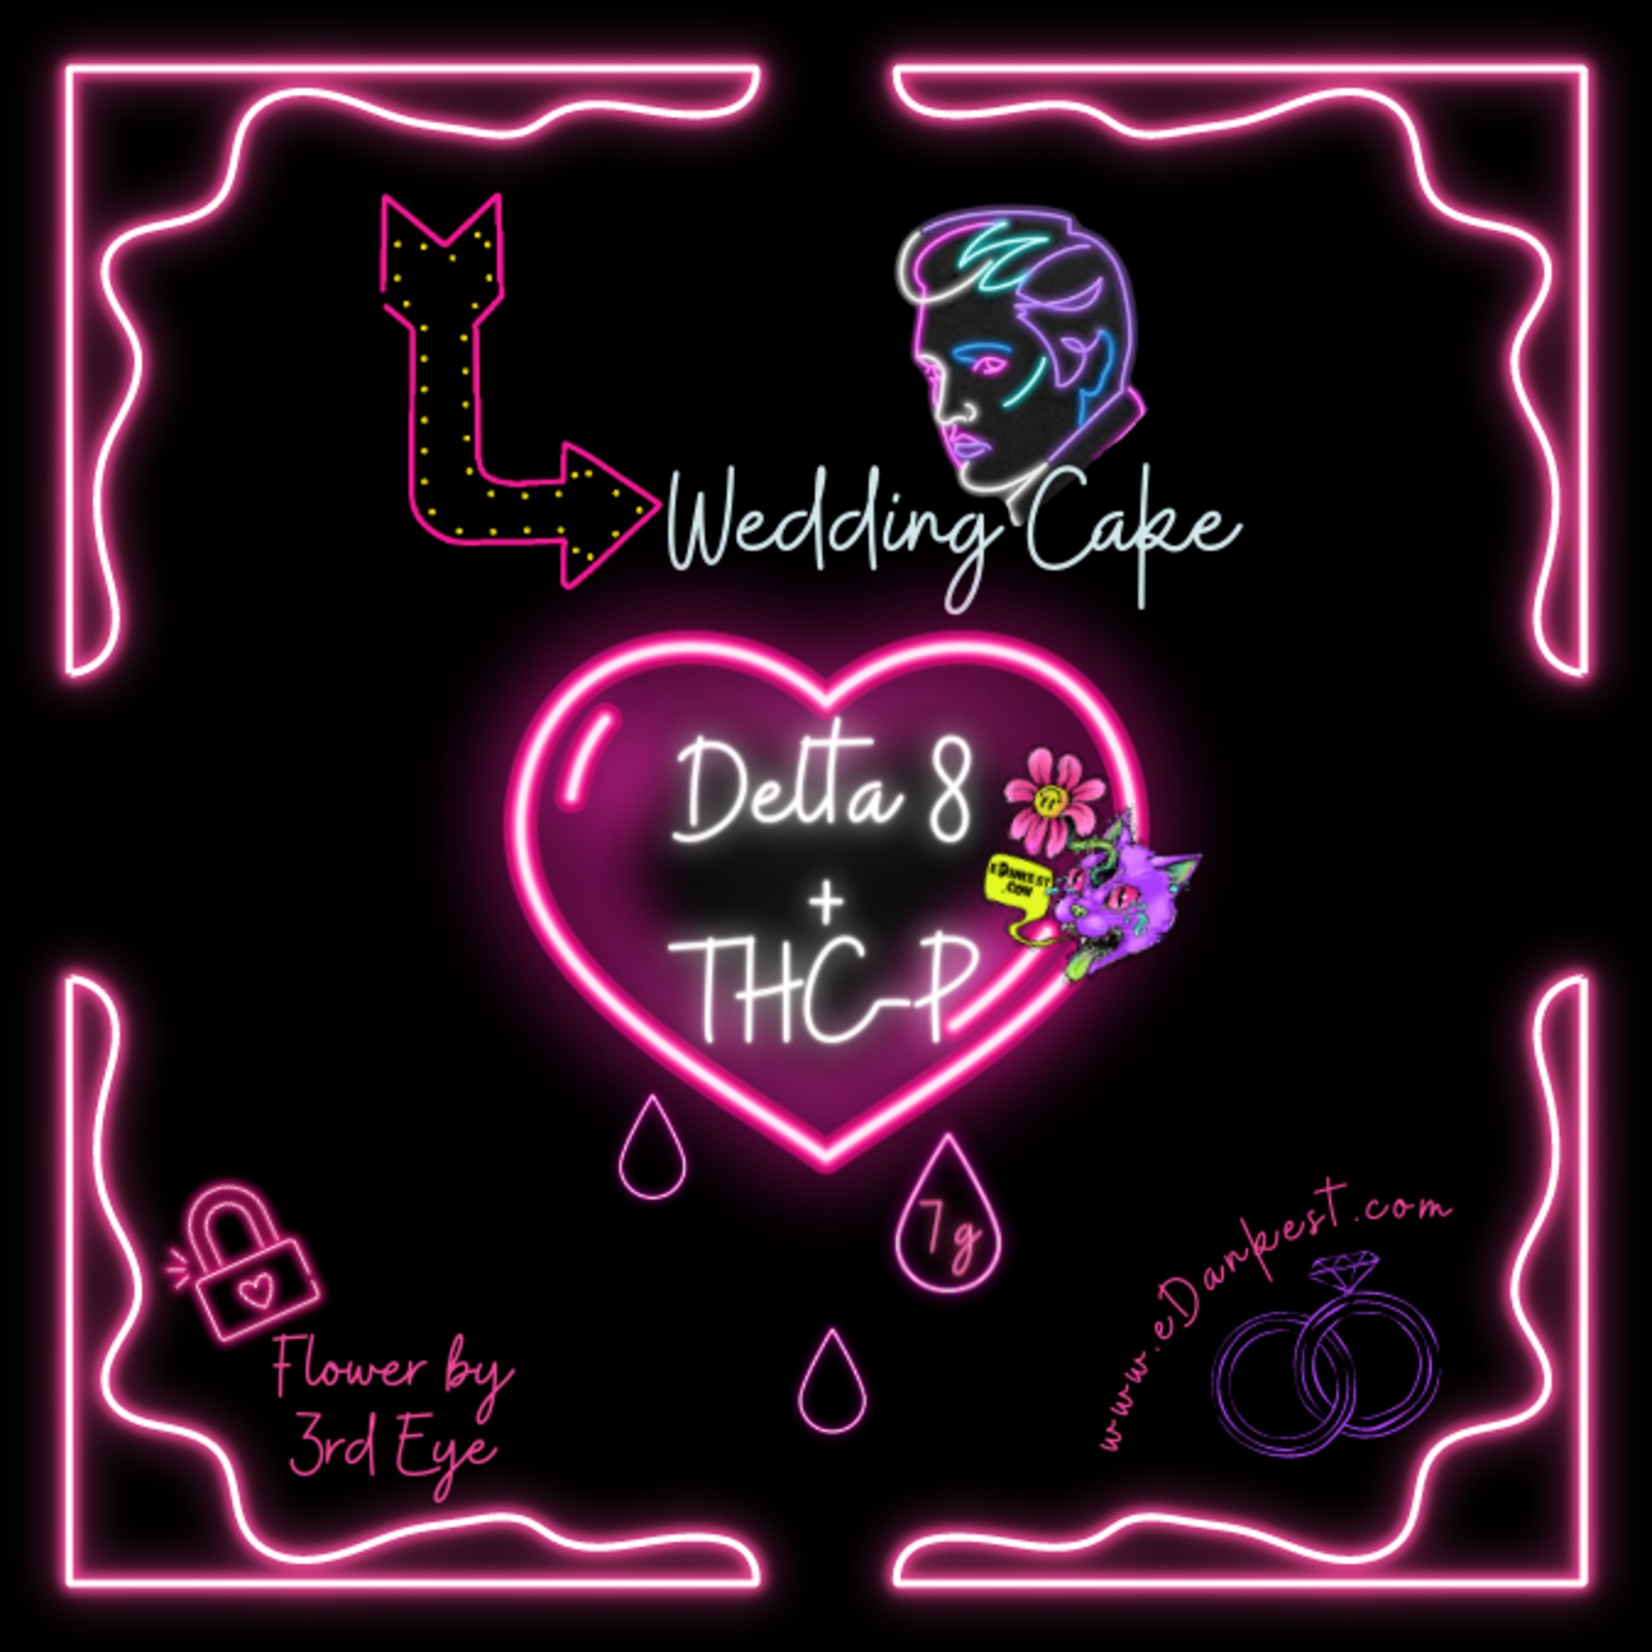 3rd Eye 3rd Eye Delta 8 + THC-P Flower - Wedding Cake